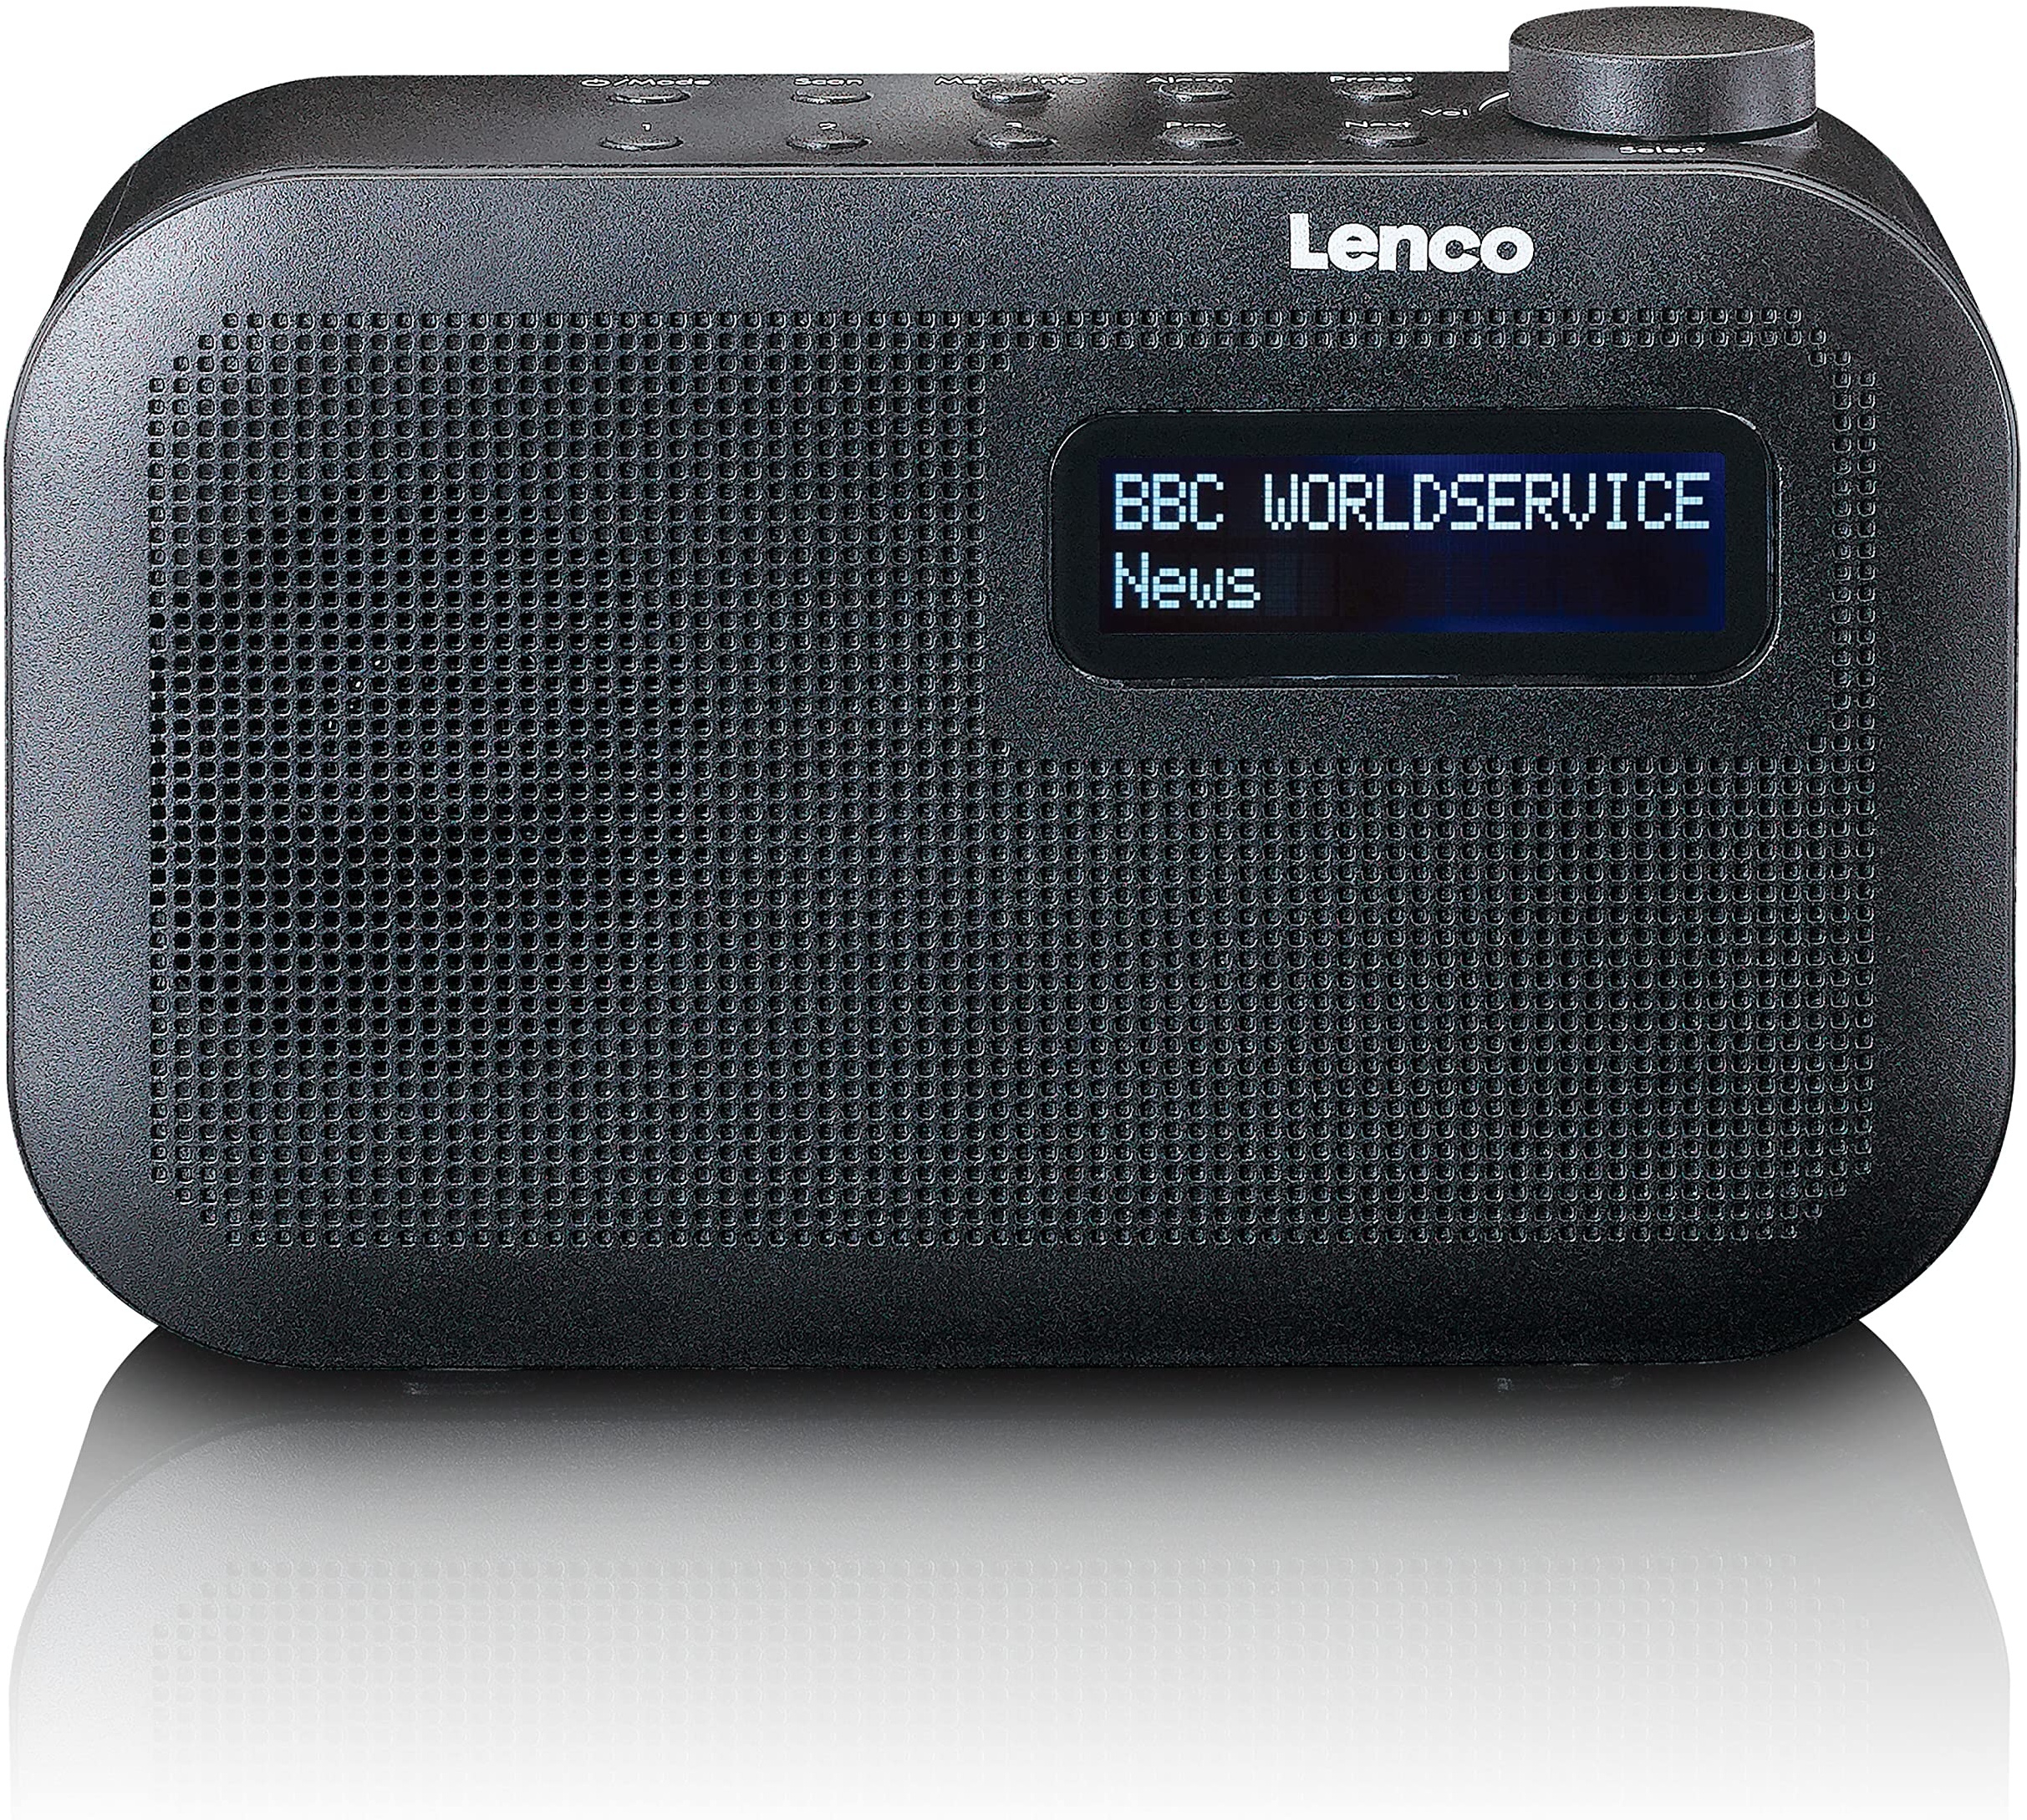 Lenco PDR-016 tragbares DAB+ Radio - Bluetooth 5.0 - PLL FM Radio - 3 Speicherplatztasten - Netzadapter - Teleskopantenne - schwarz